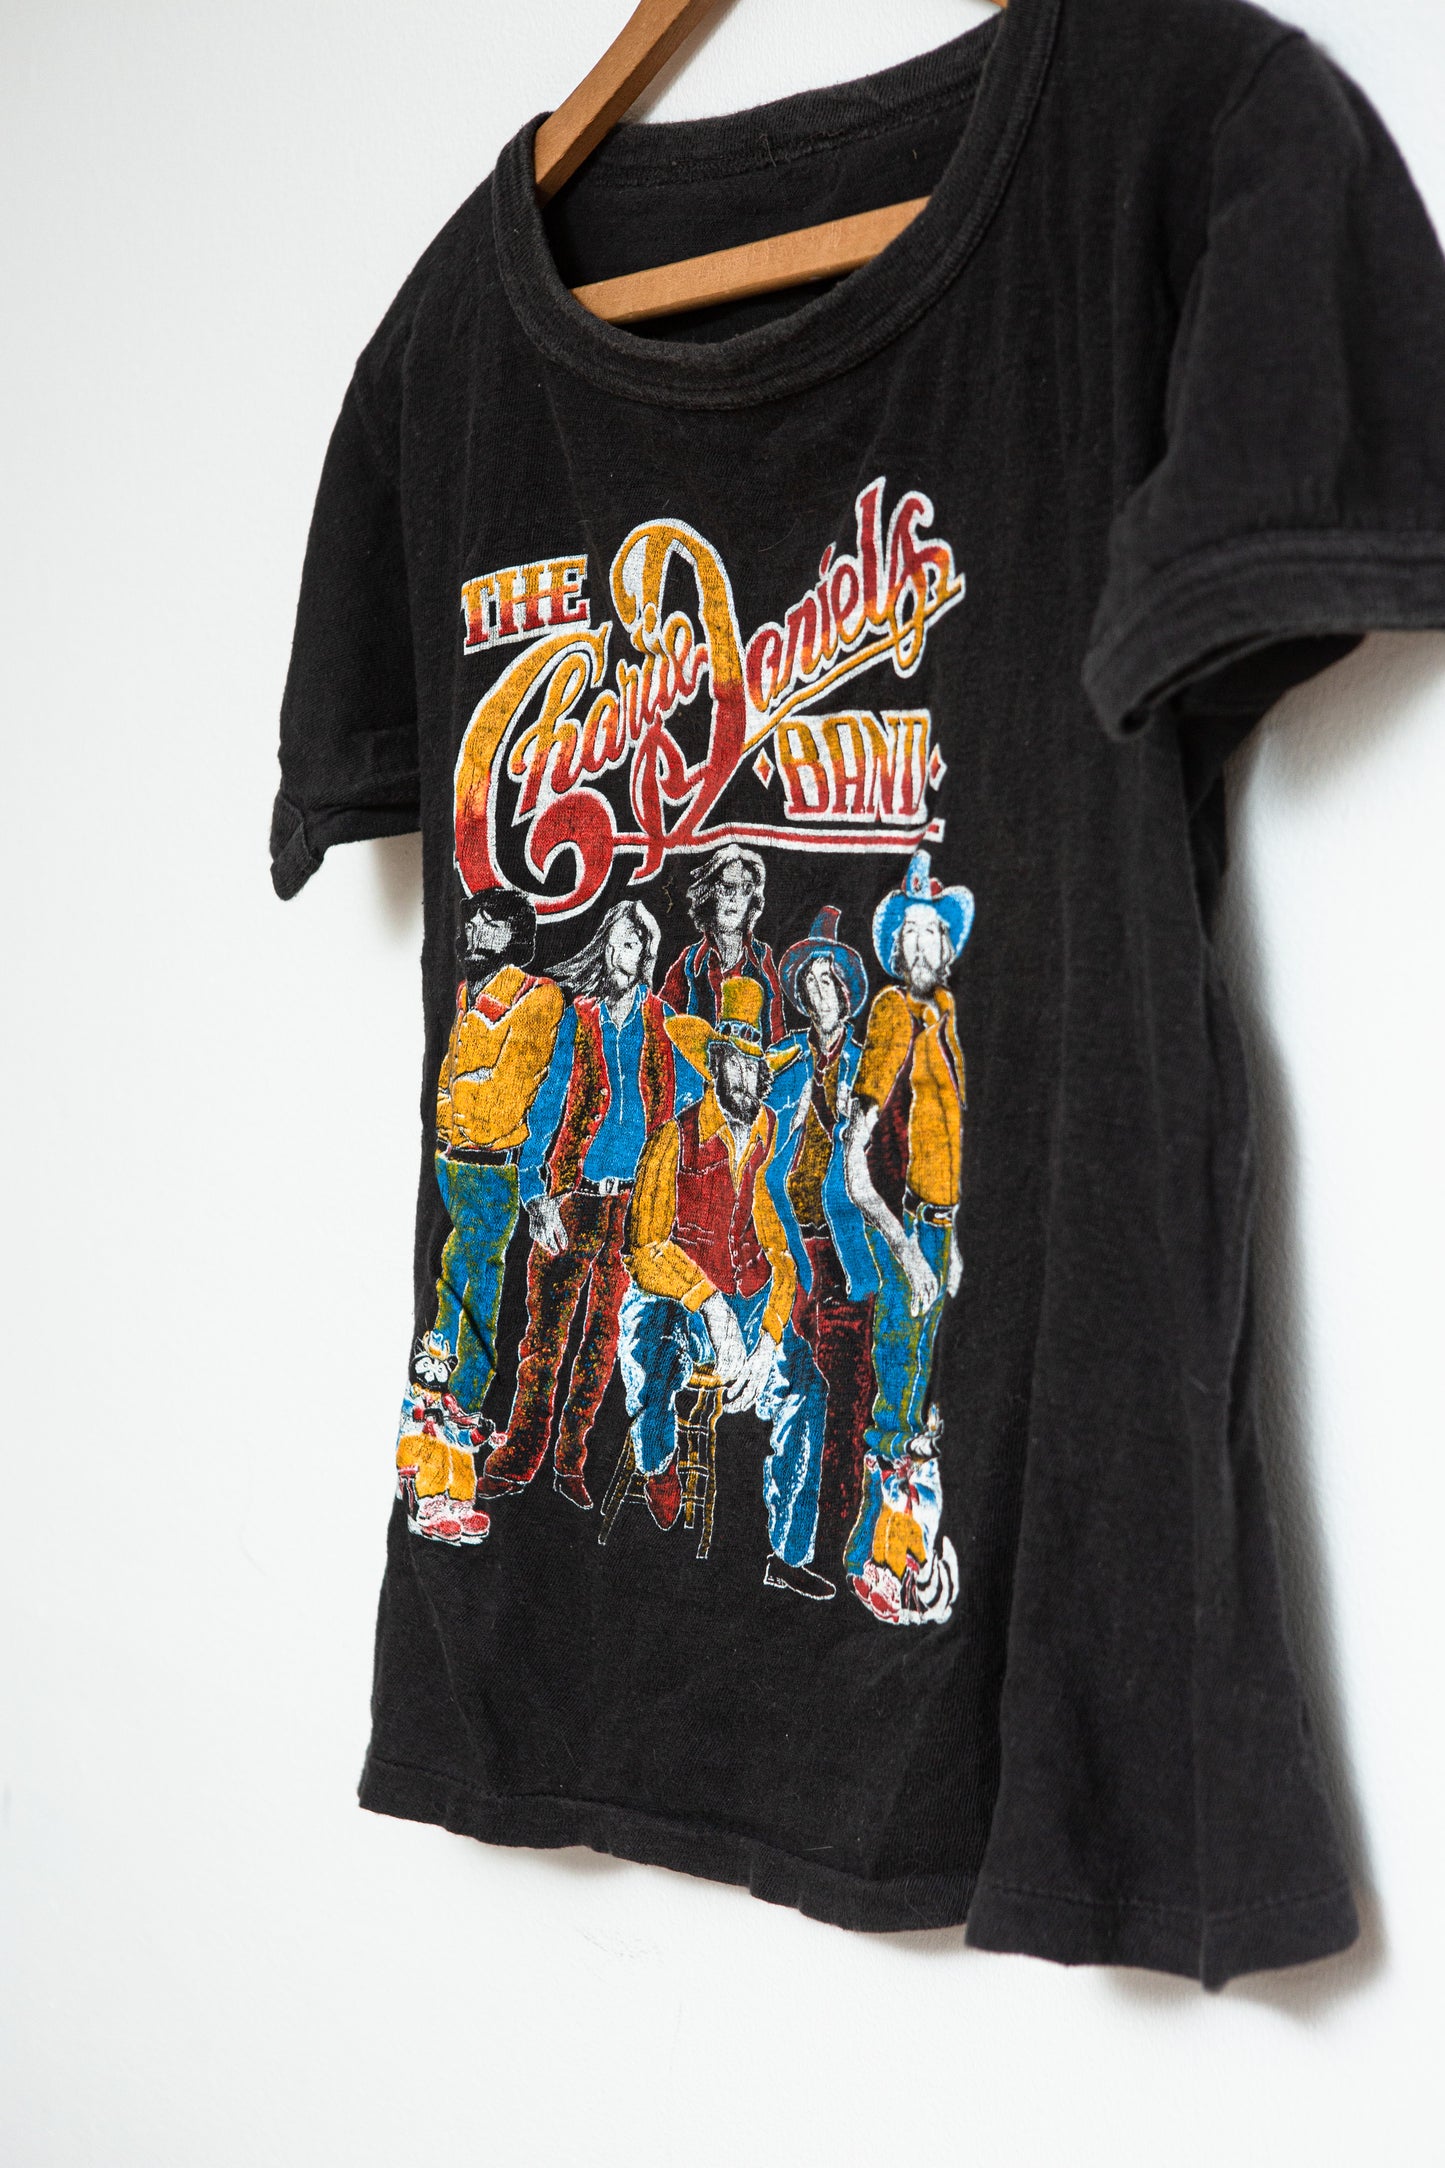 Vintage 80's The Charlie Daniels Band Concert T-Shirt